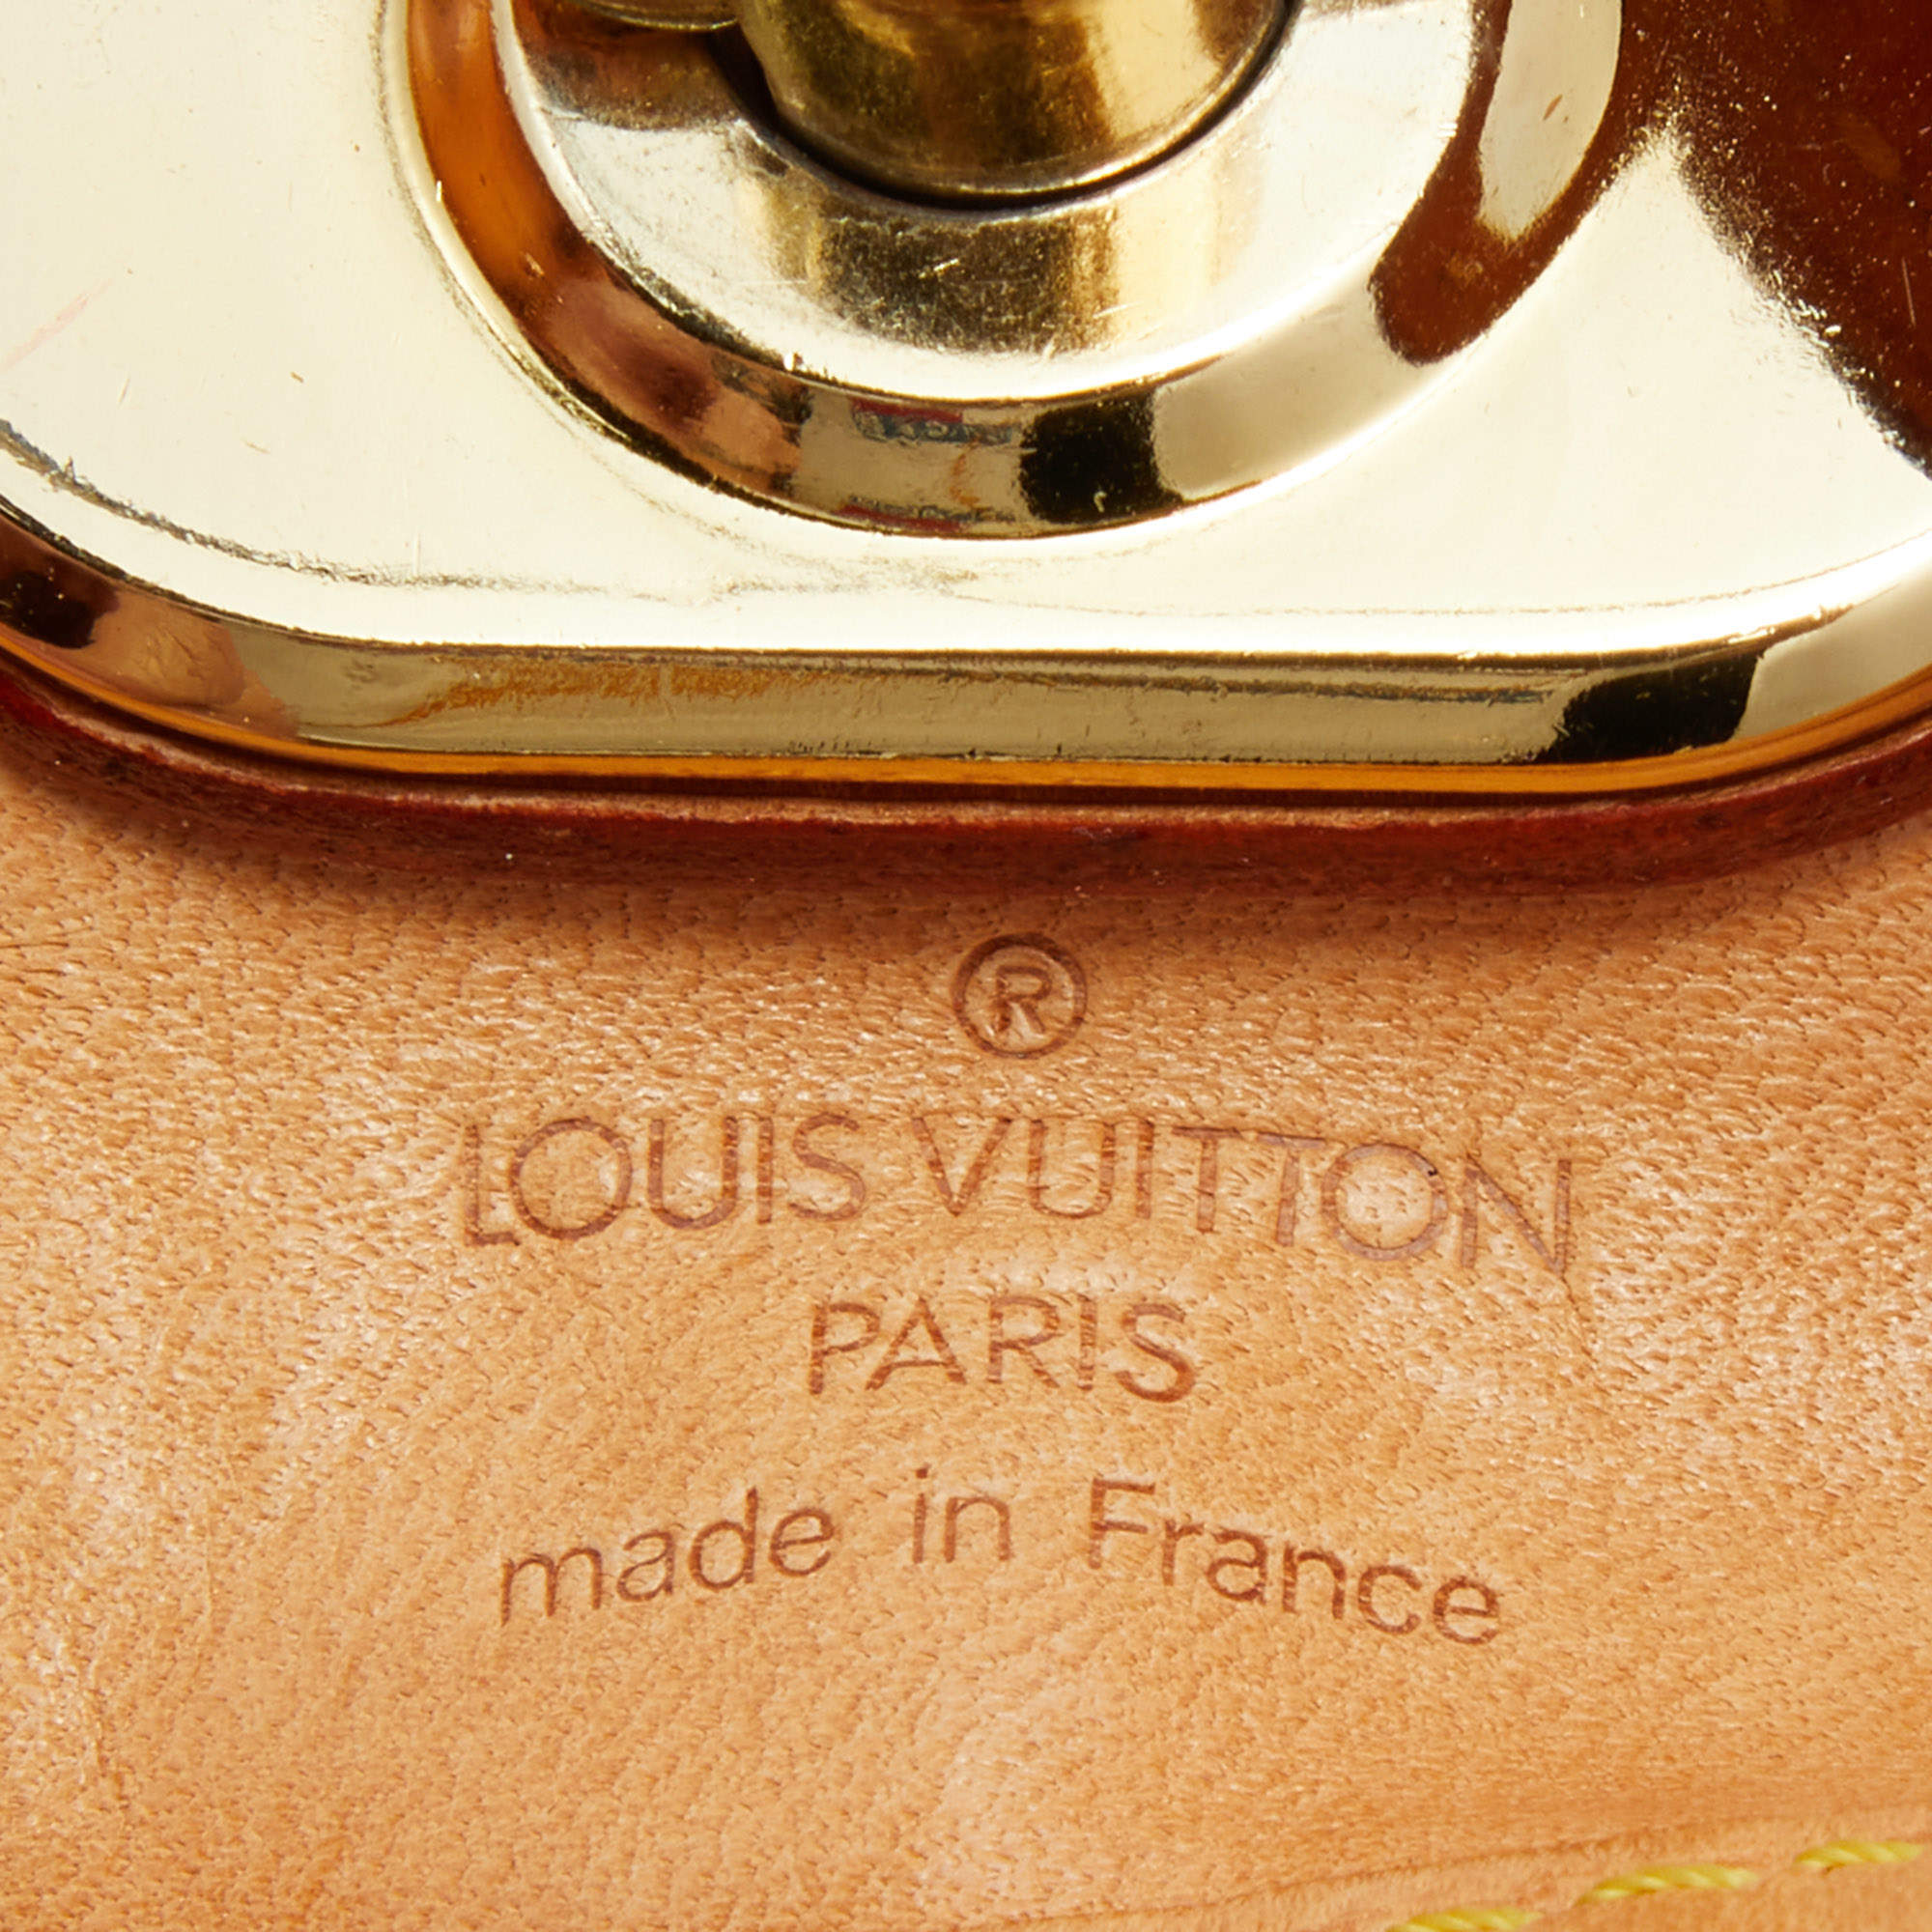 LOUIS VUITTON Monogram Garment Cover 2 Hangers 1264588